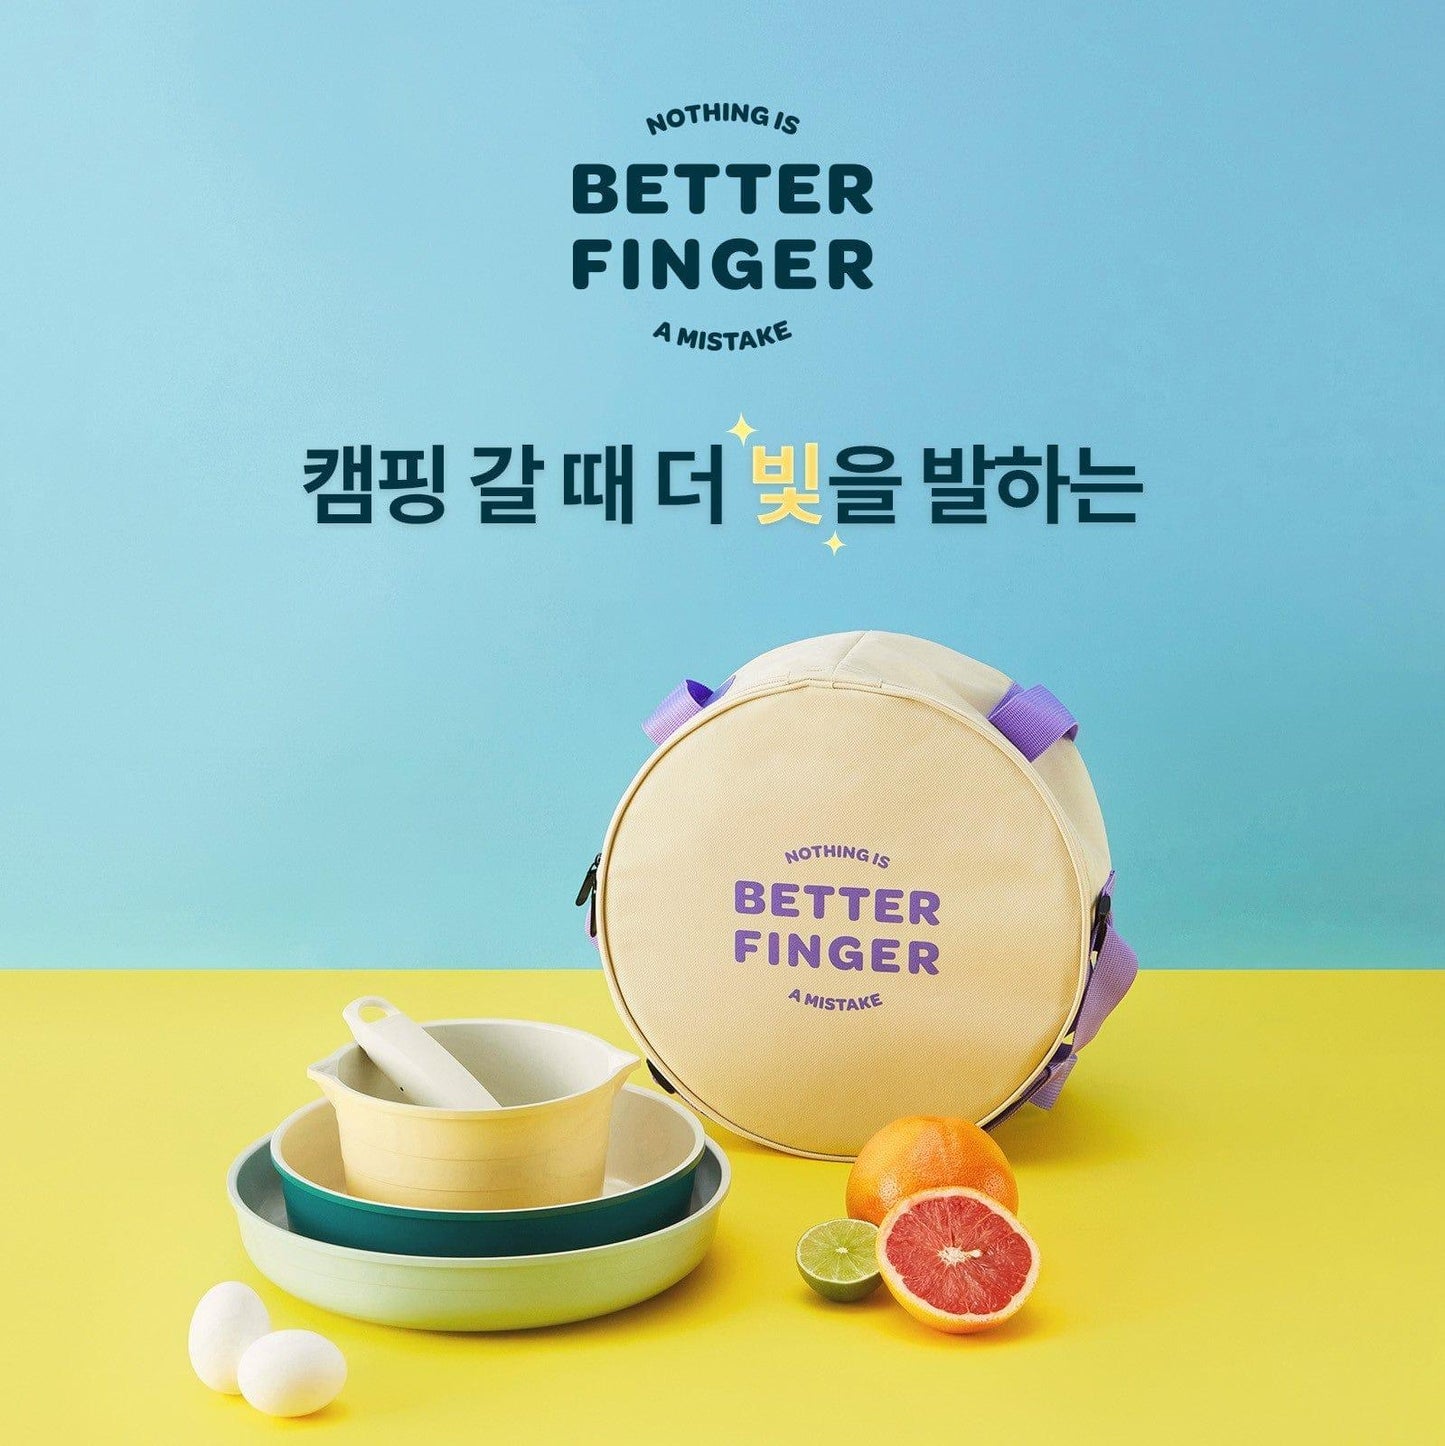 Better Finger Wonder Hands Cookware Set - Kgift.shop